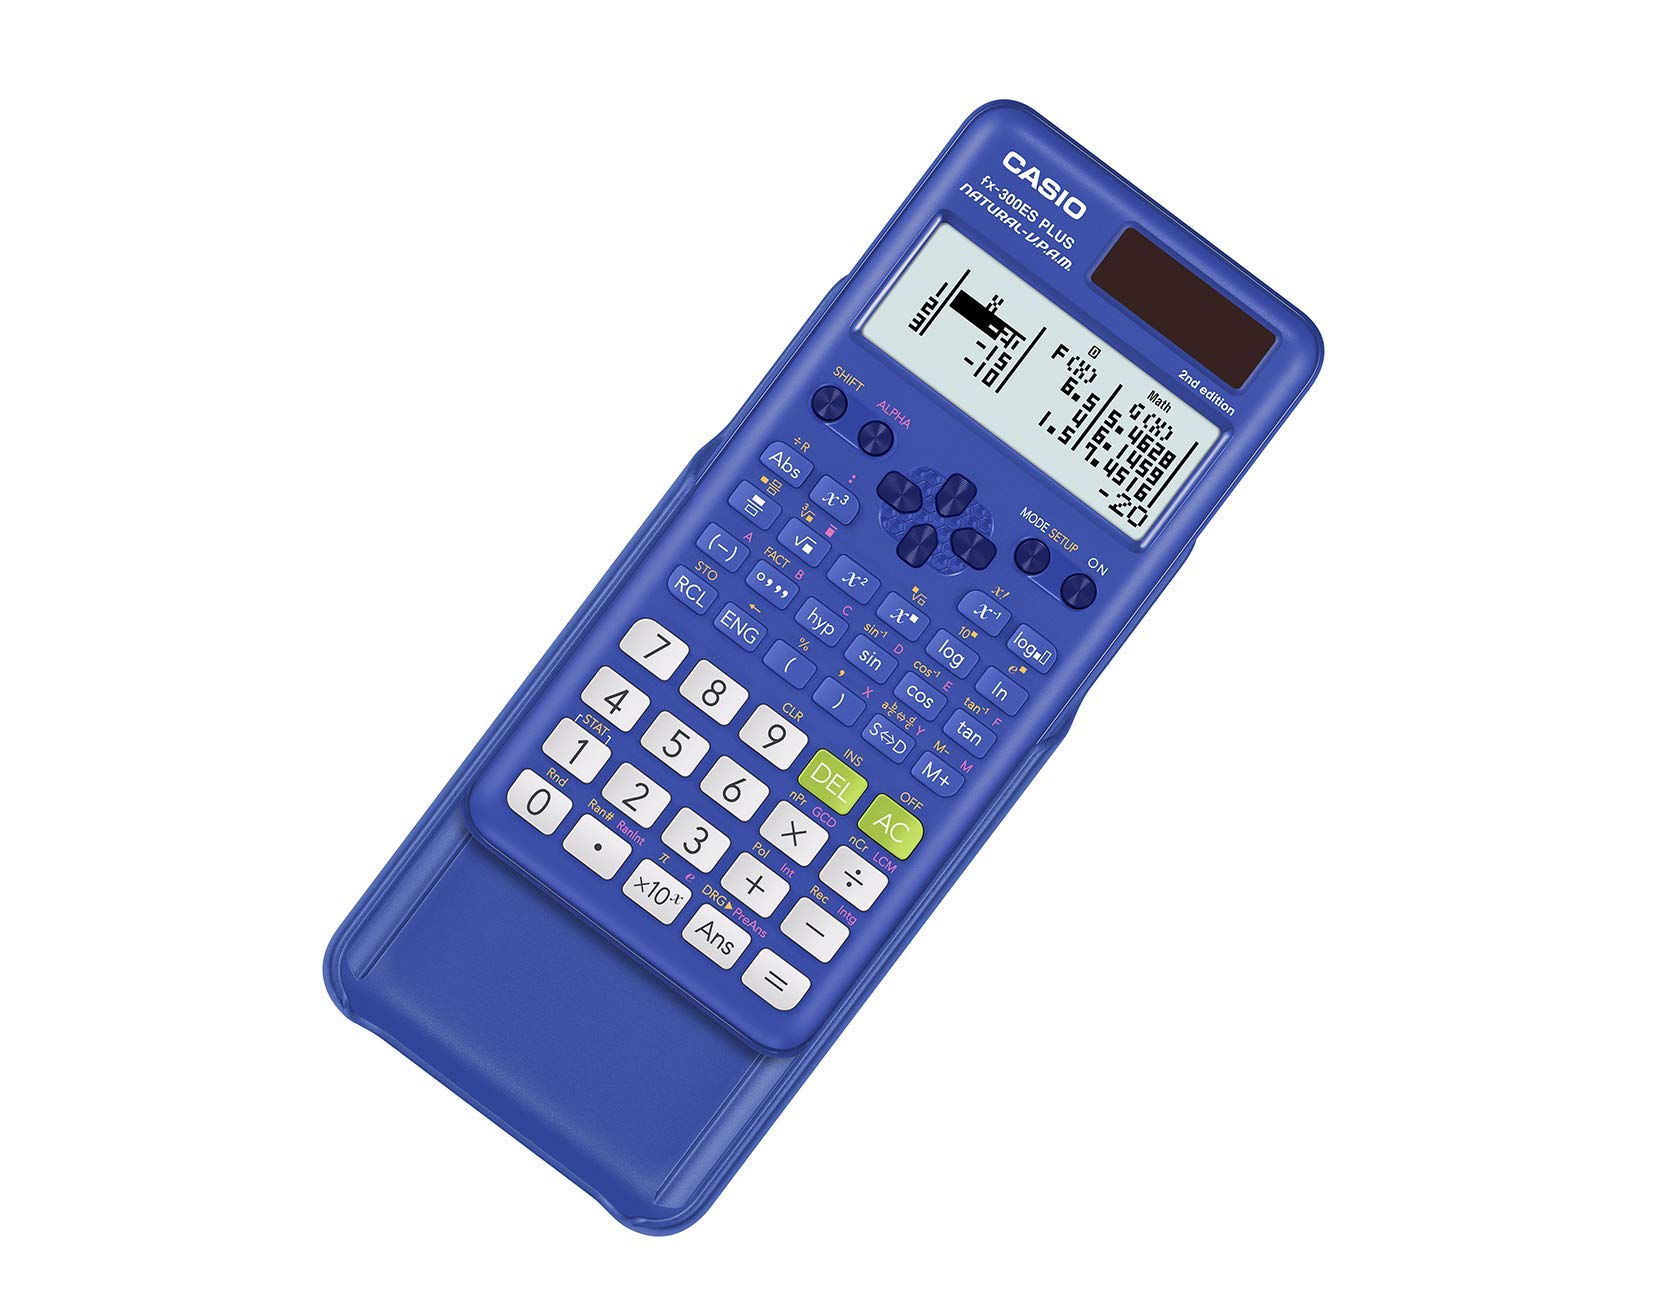 Casio fx-300ESPLS2 Blue Scientific Calculator Small